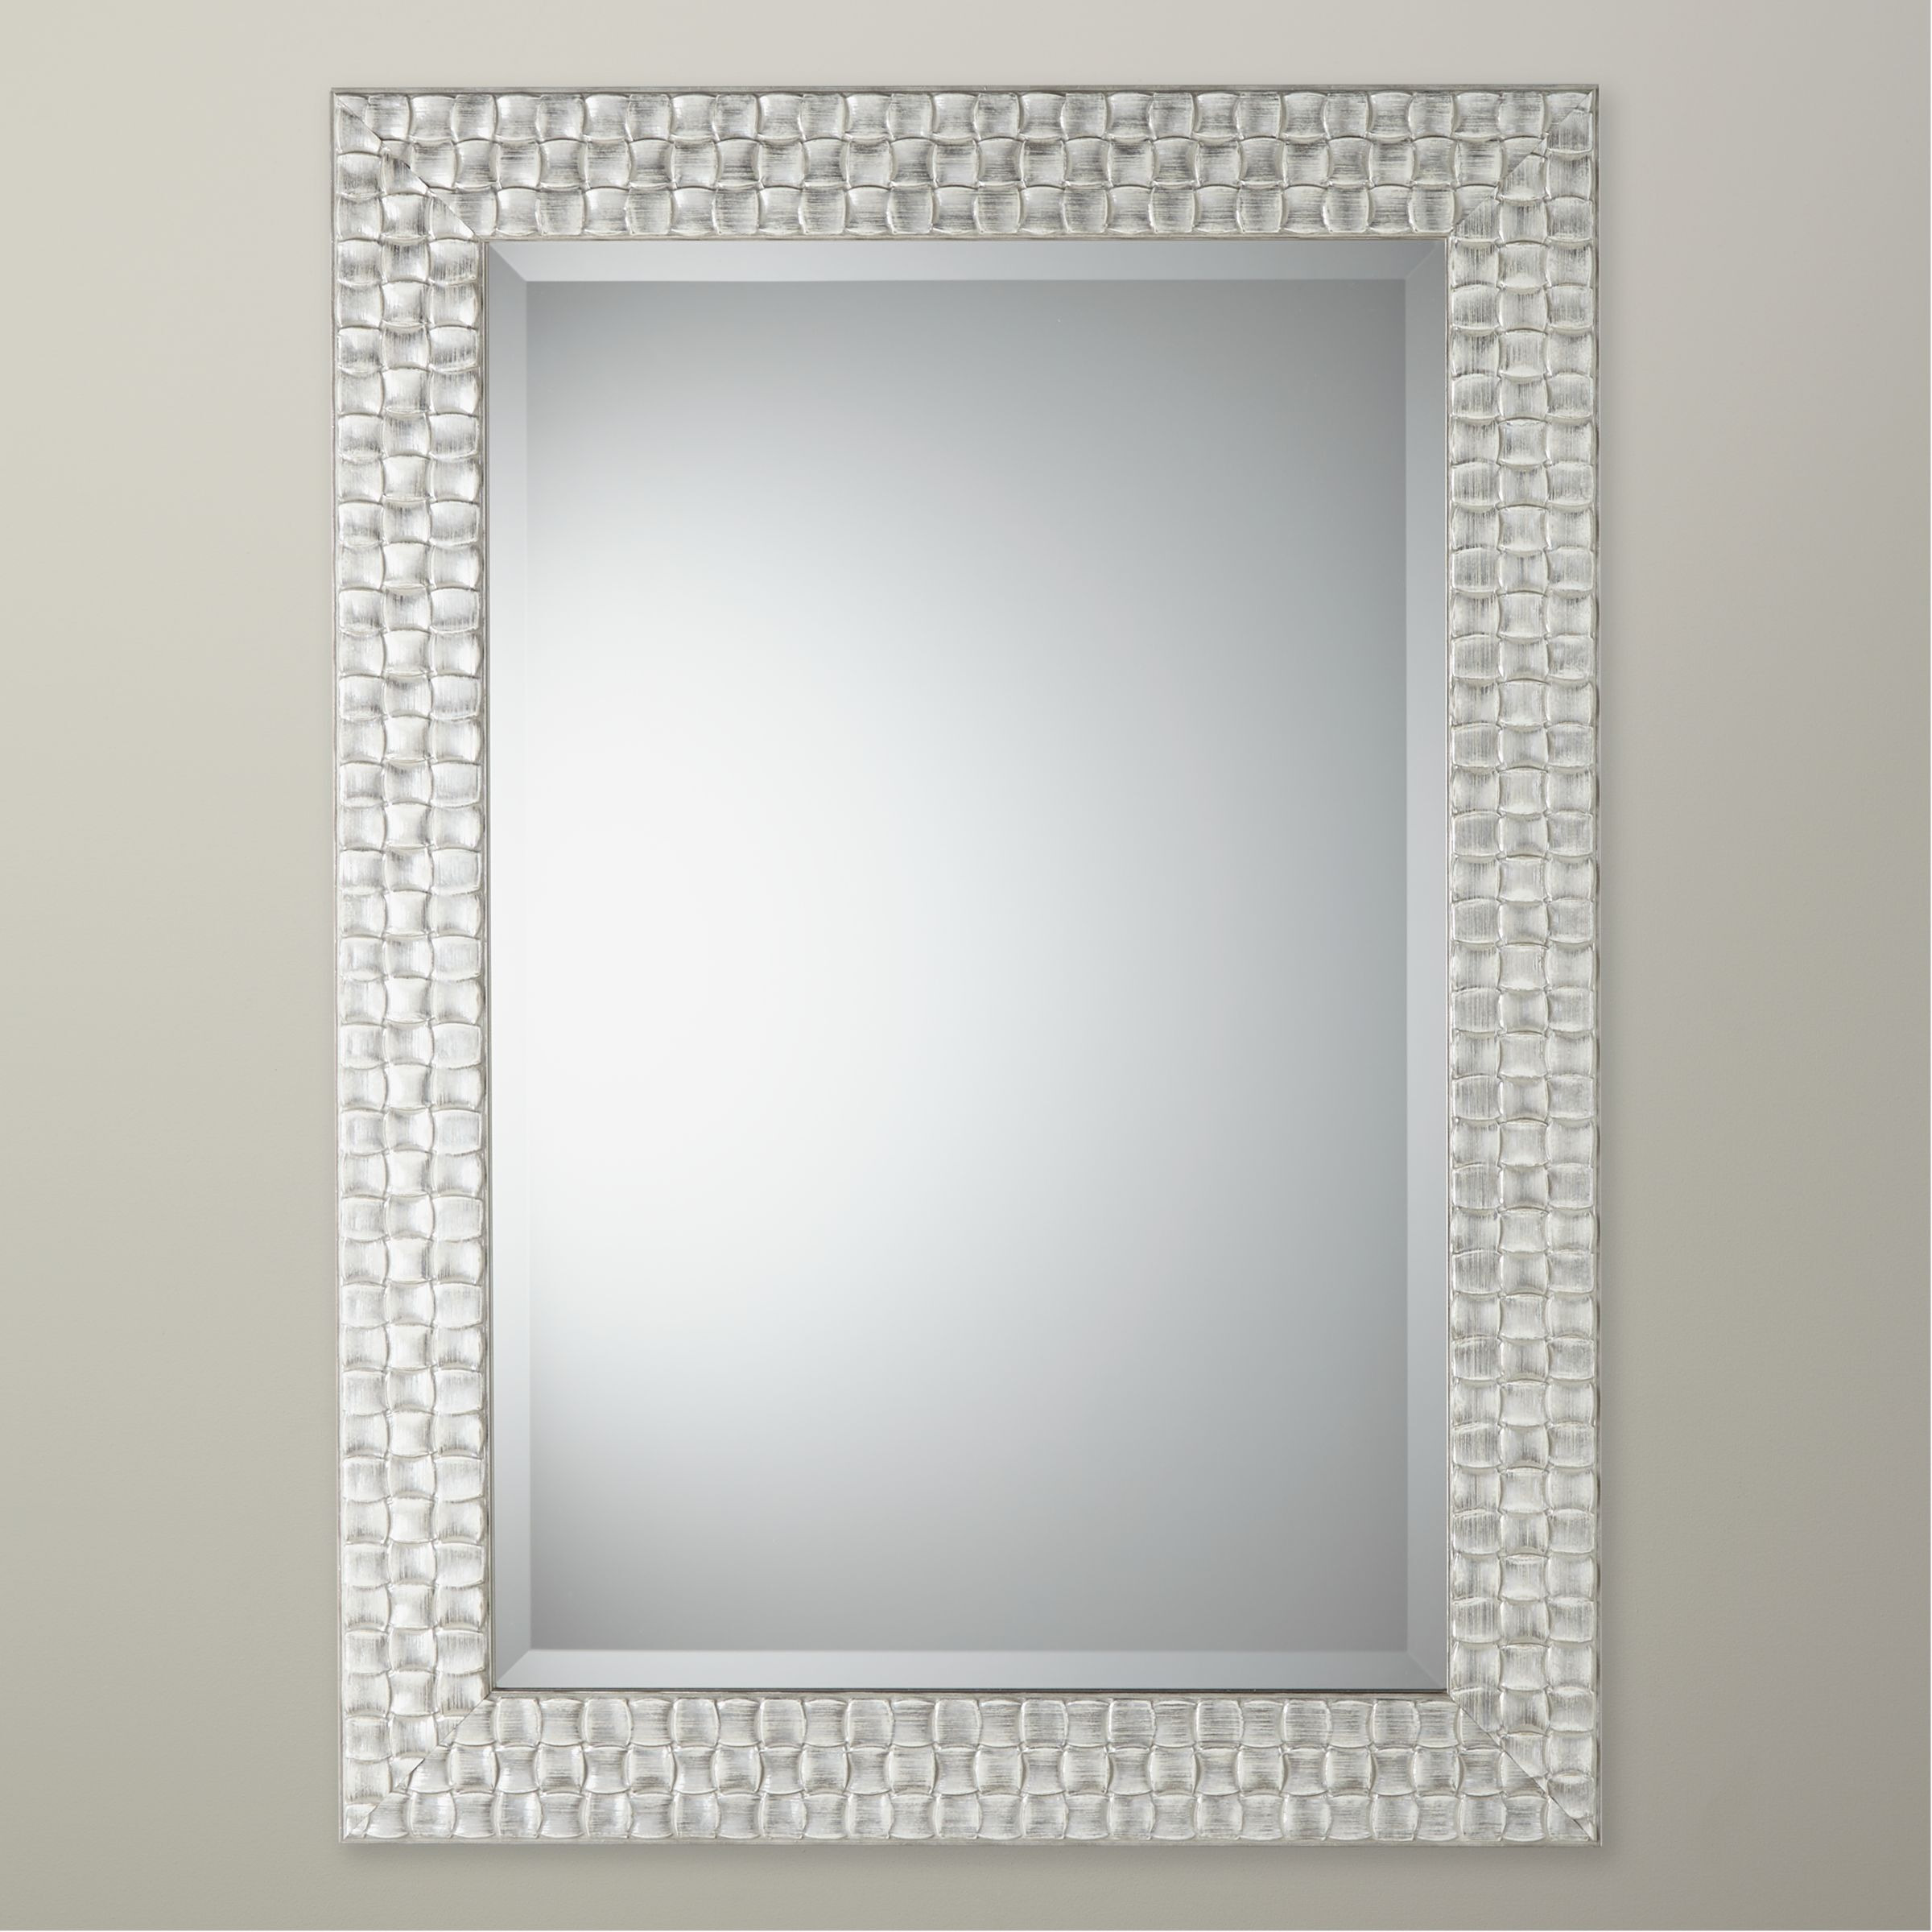 John Lewis Mosaic Wall Mirror, Silver/White - image 1